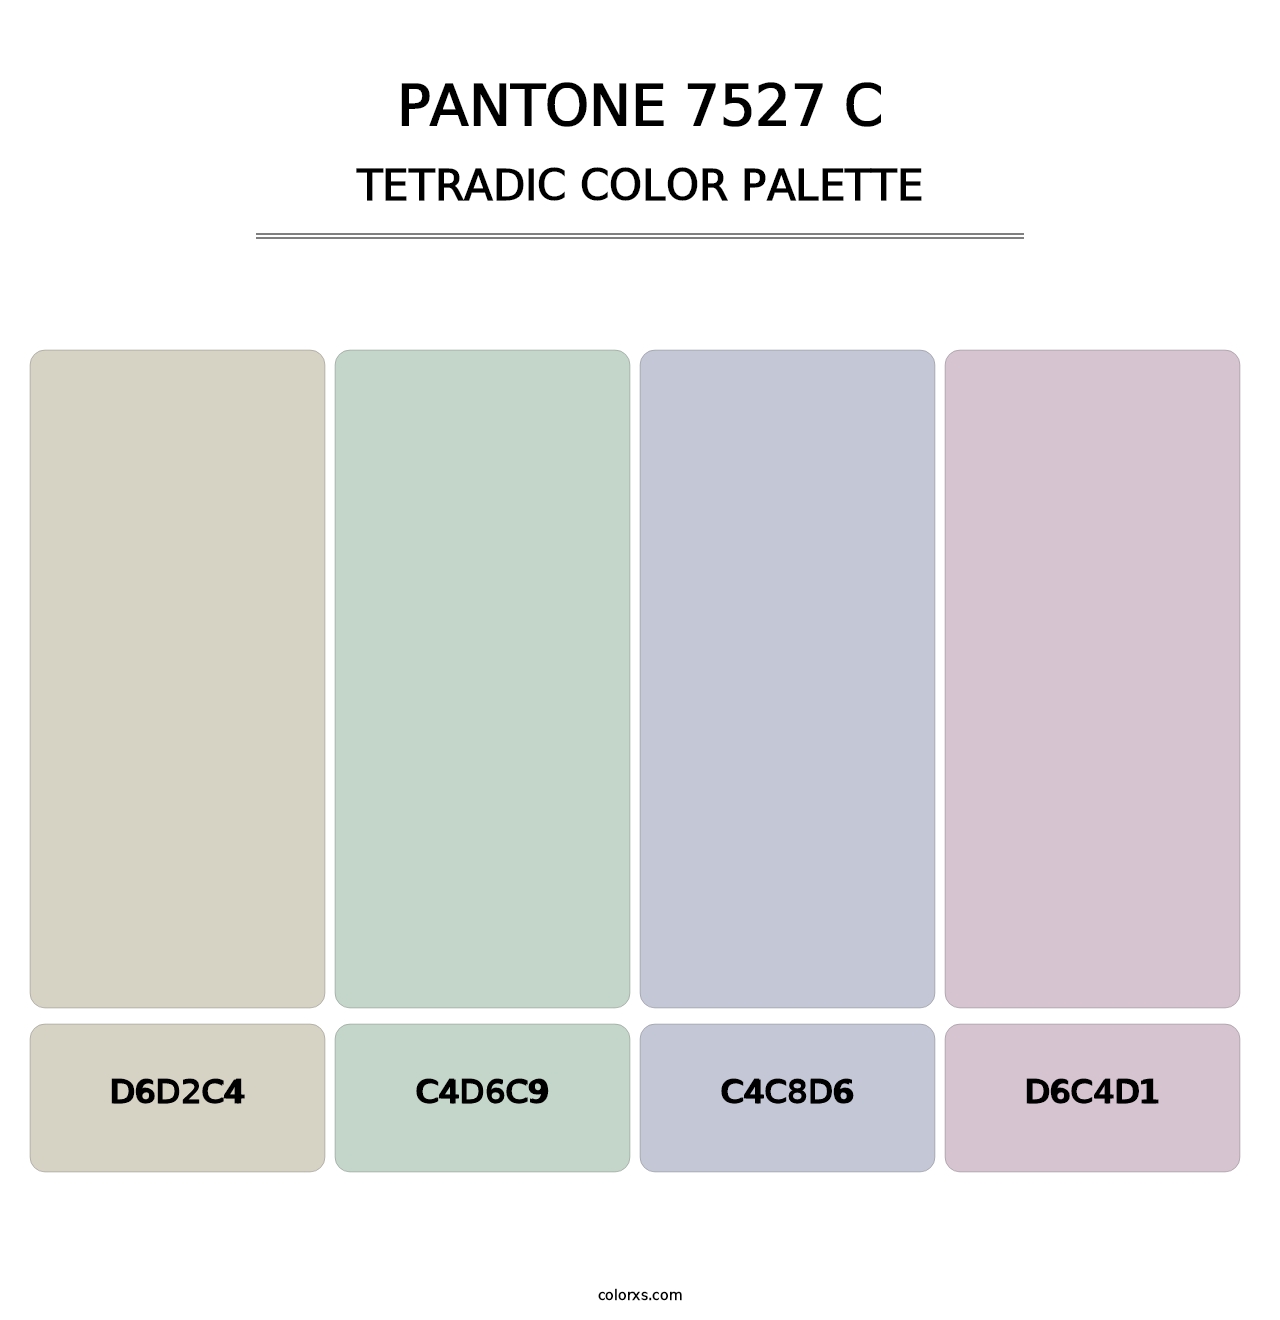 PANTONE 7527 C - Tetradic Color Palette